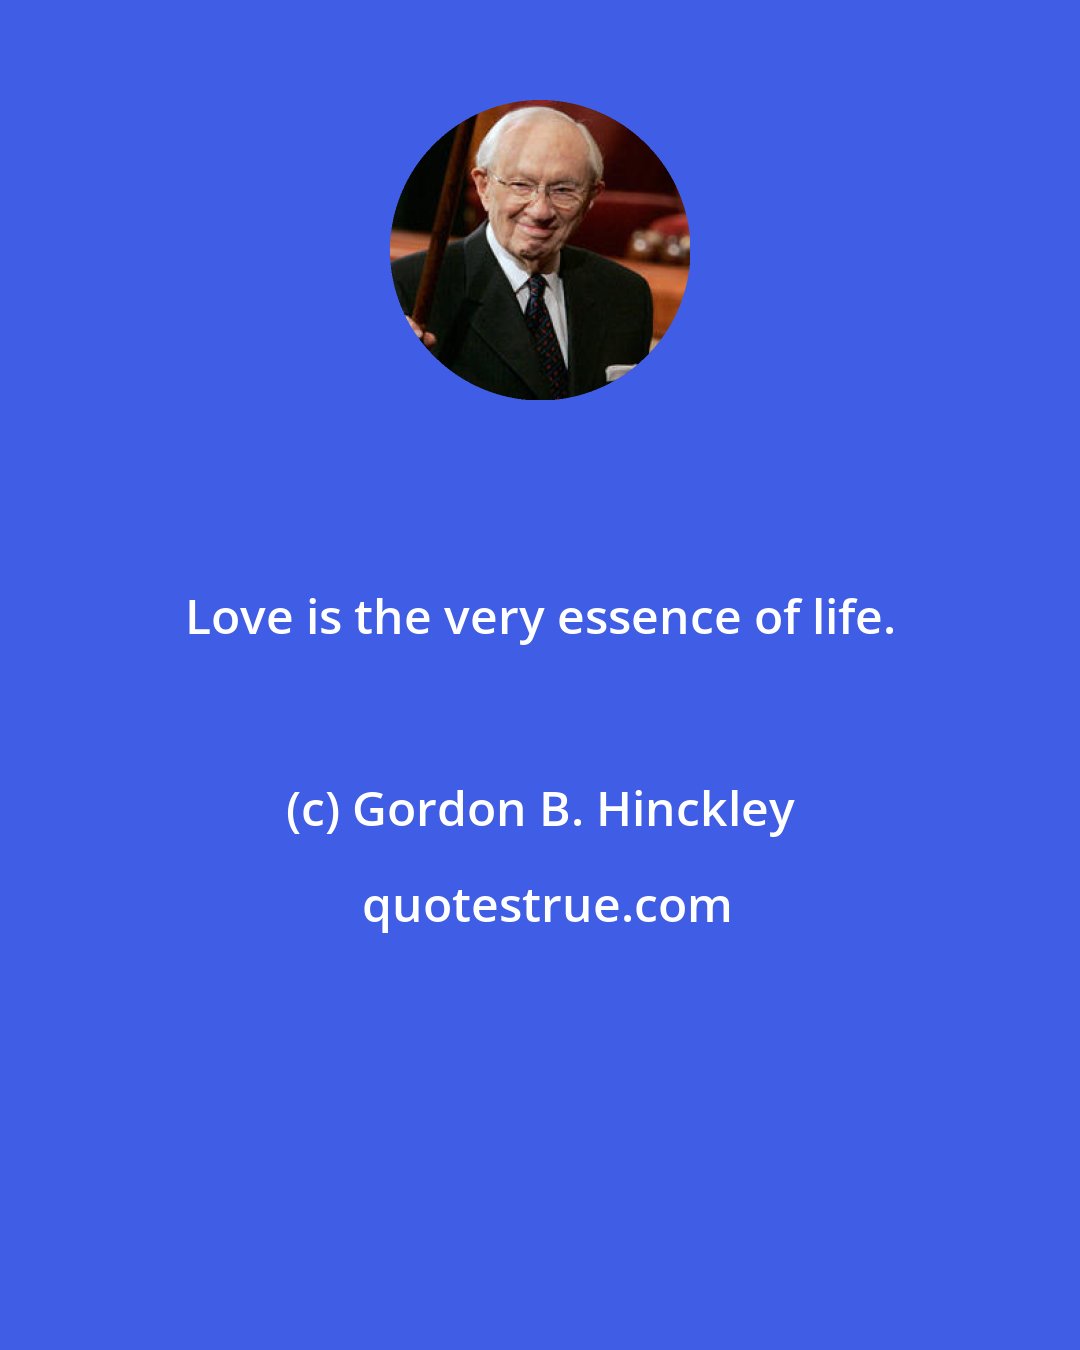 Gordon B. Hinckley: Love is the very essence of life.